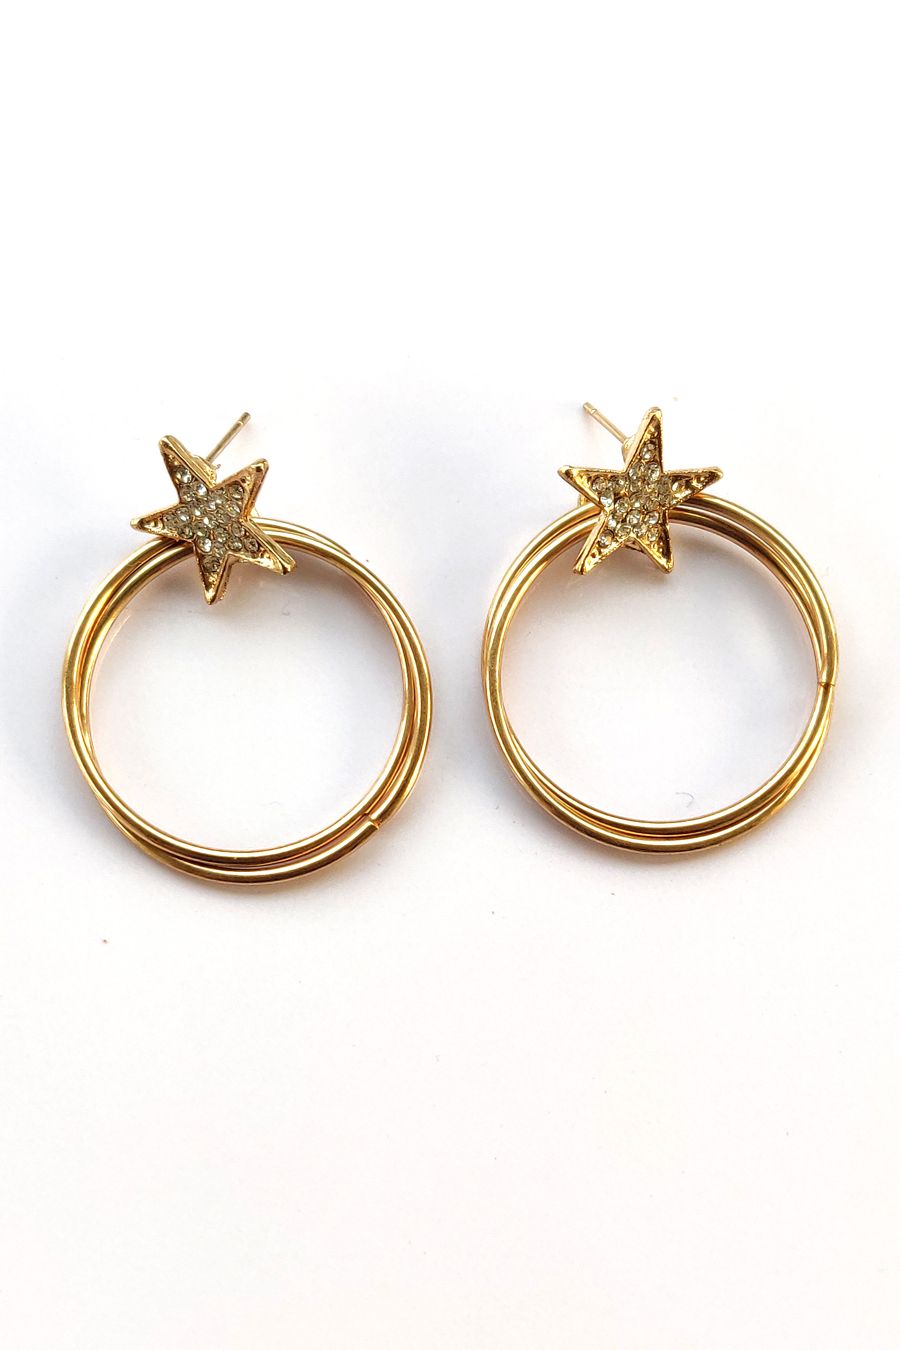 Gold earrings rings 1 cm with pattern engraving  JewelryAndGemseu